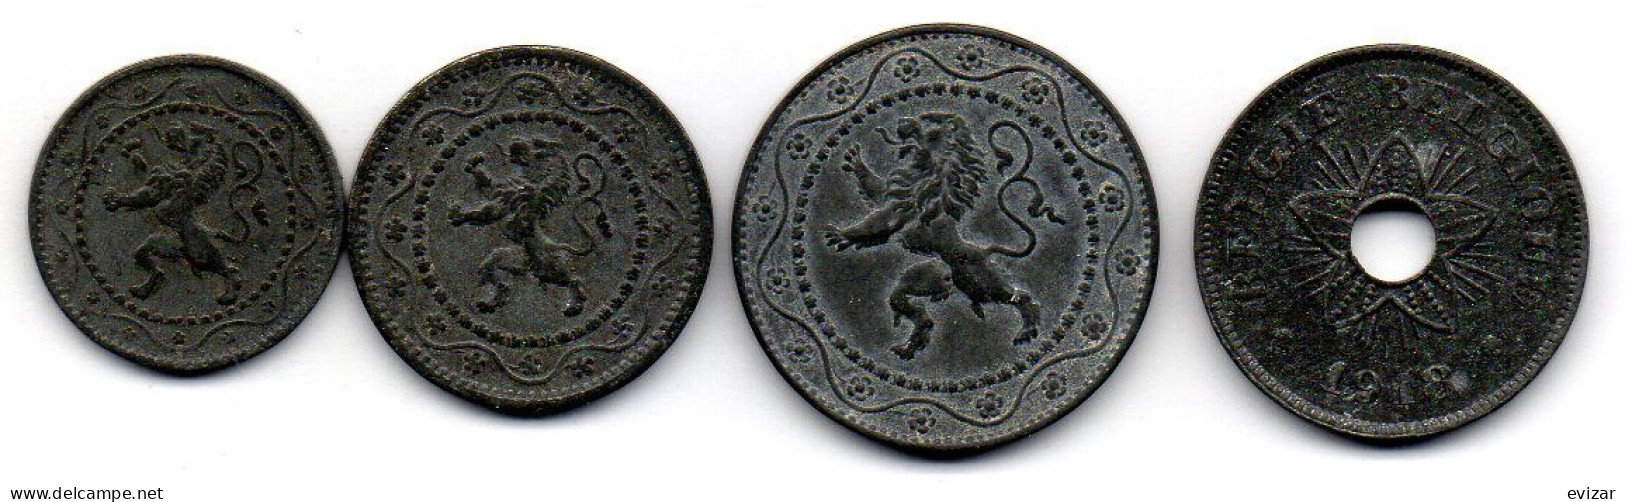 BELGIUM - GERMAN OCCUPATION WWI - Set Of Four Coins 5, 10, 25, 50 Centimes, Zinc, Year 1915-18, KM # 80, 81, 82, 83 - Unclassified